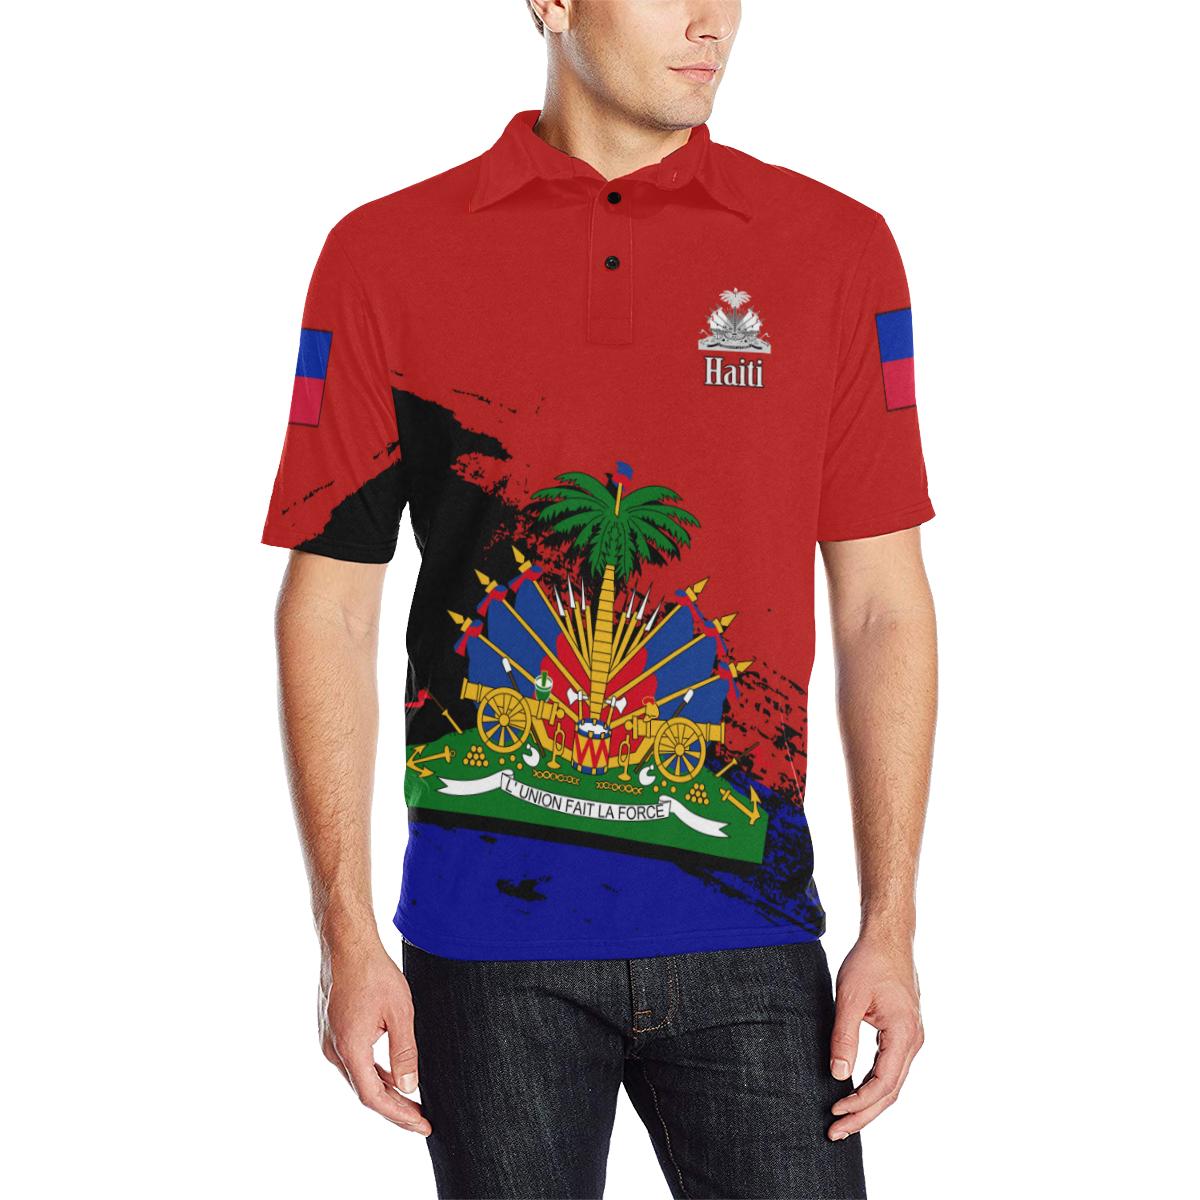 haiti-special-polo-shirt